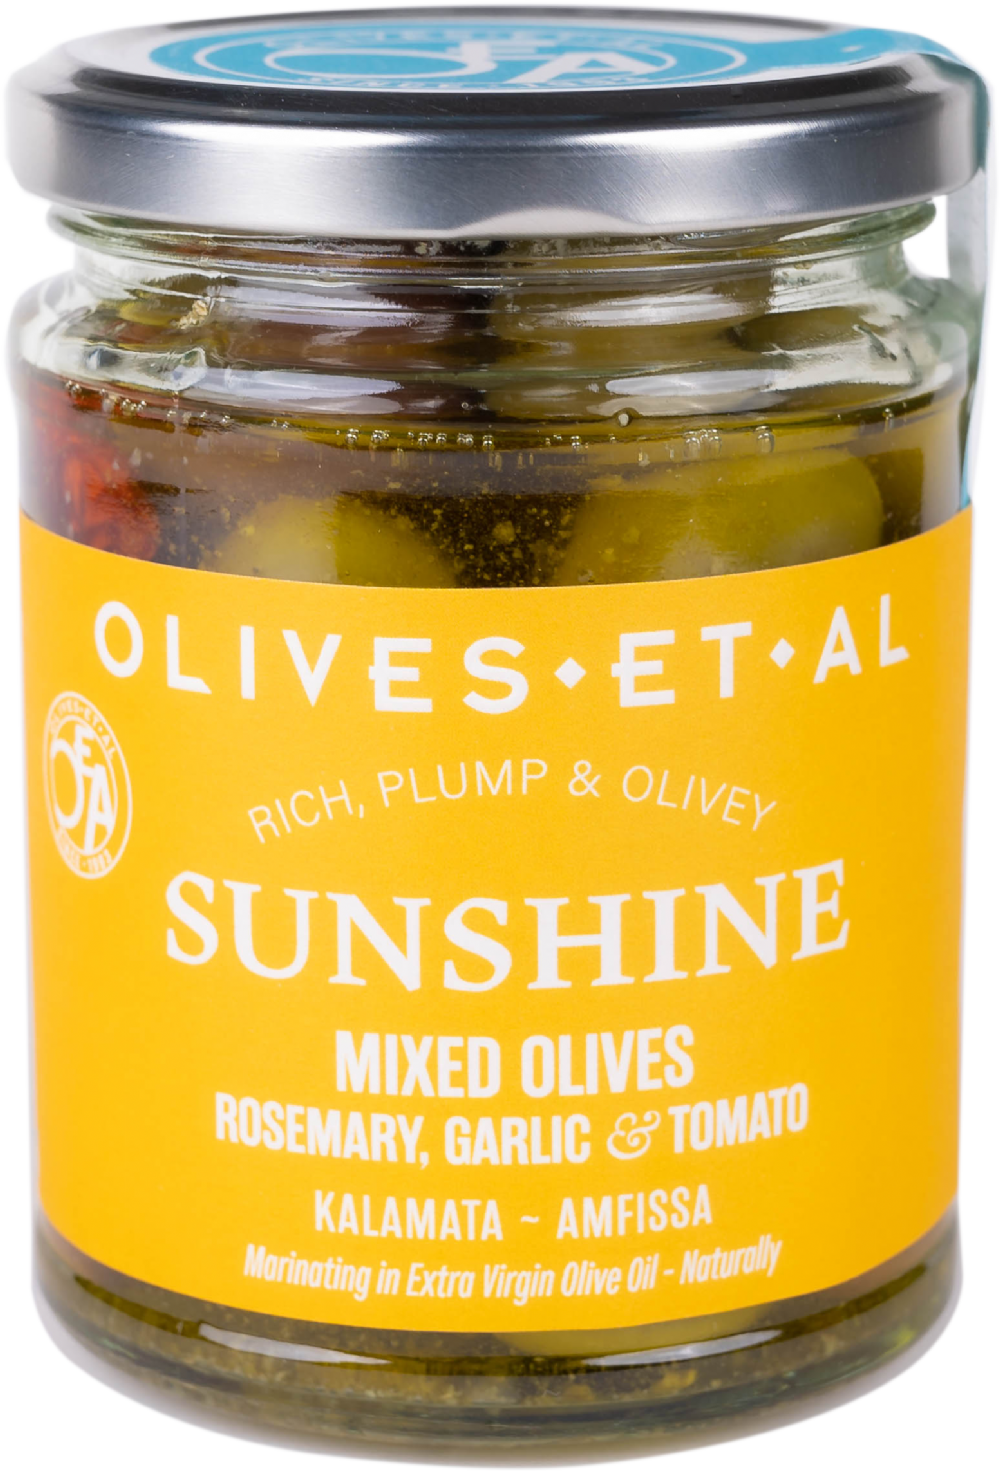 OLIVES ET AL Sunshine Olives Rosemary, Garlic & Tomato 250g